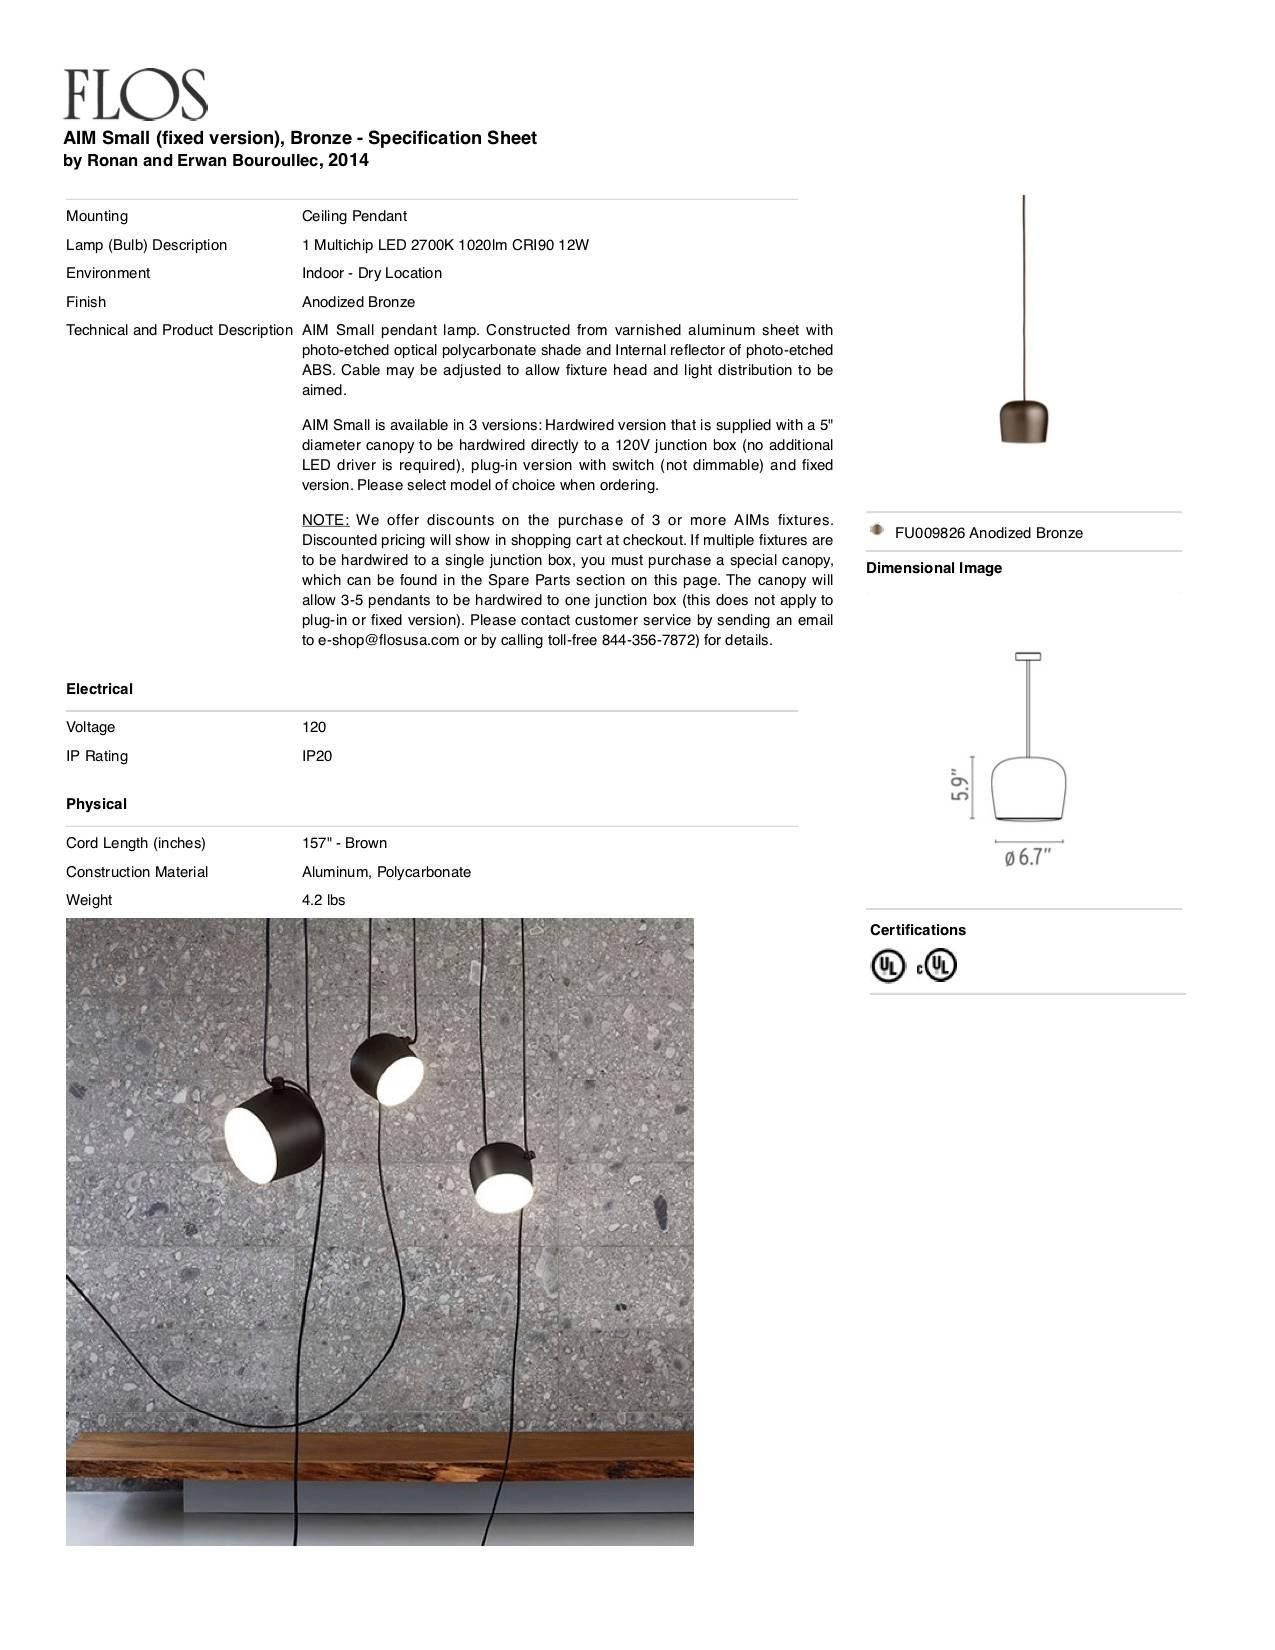 Italian Bouroullec Modern Bronze Custom Small Aim Light Hanging Pendant or Bedside, FLOS